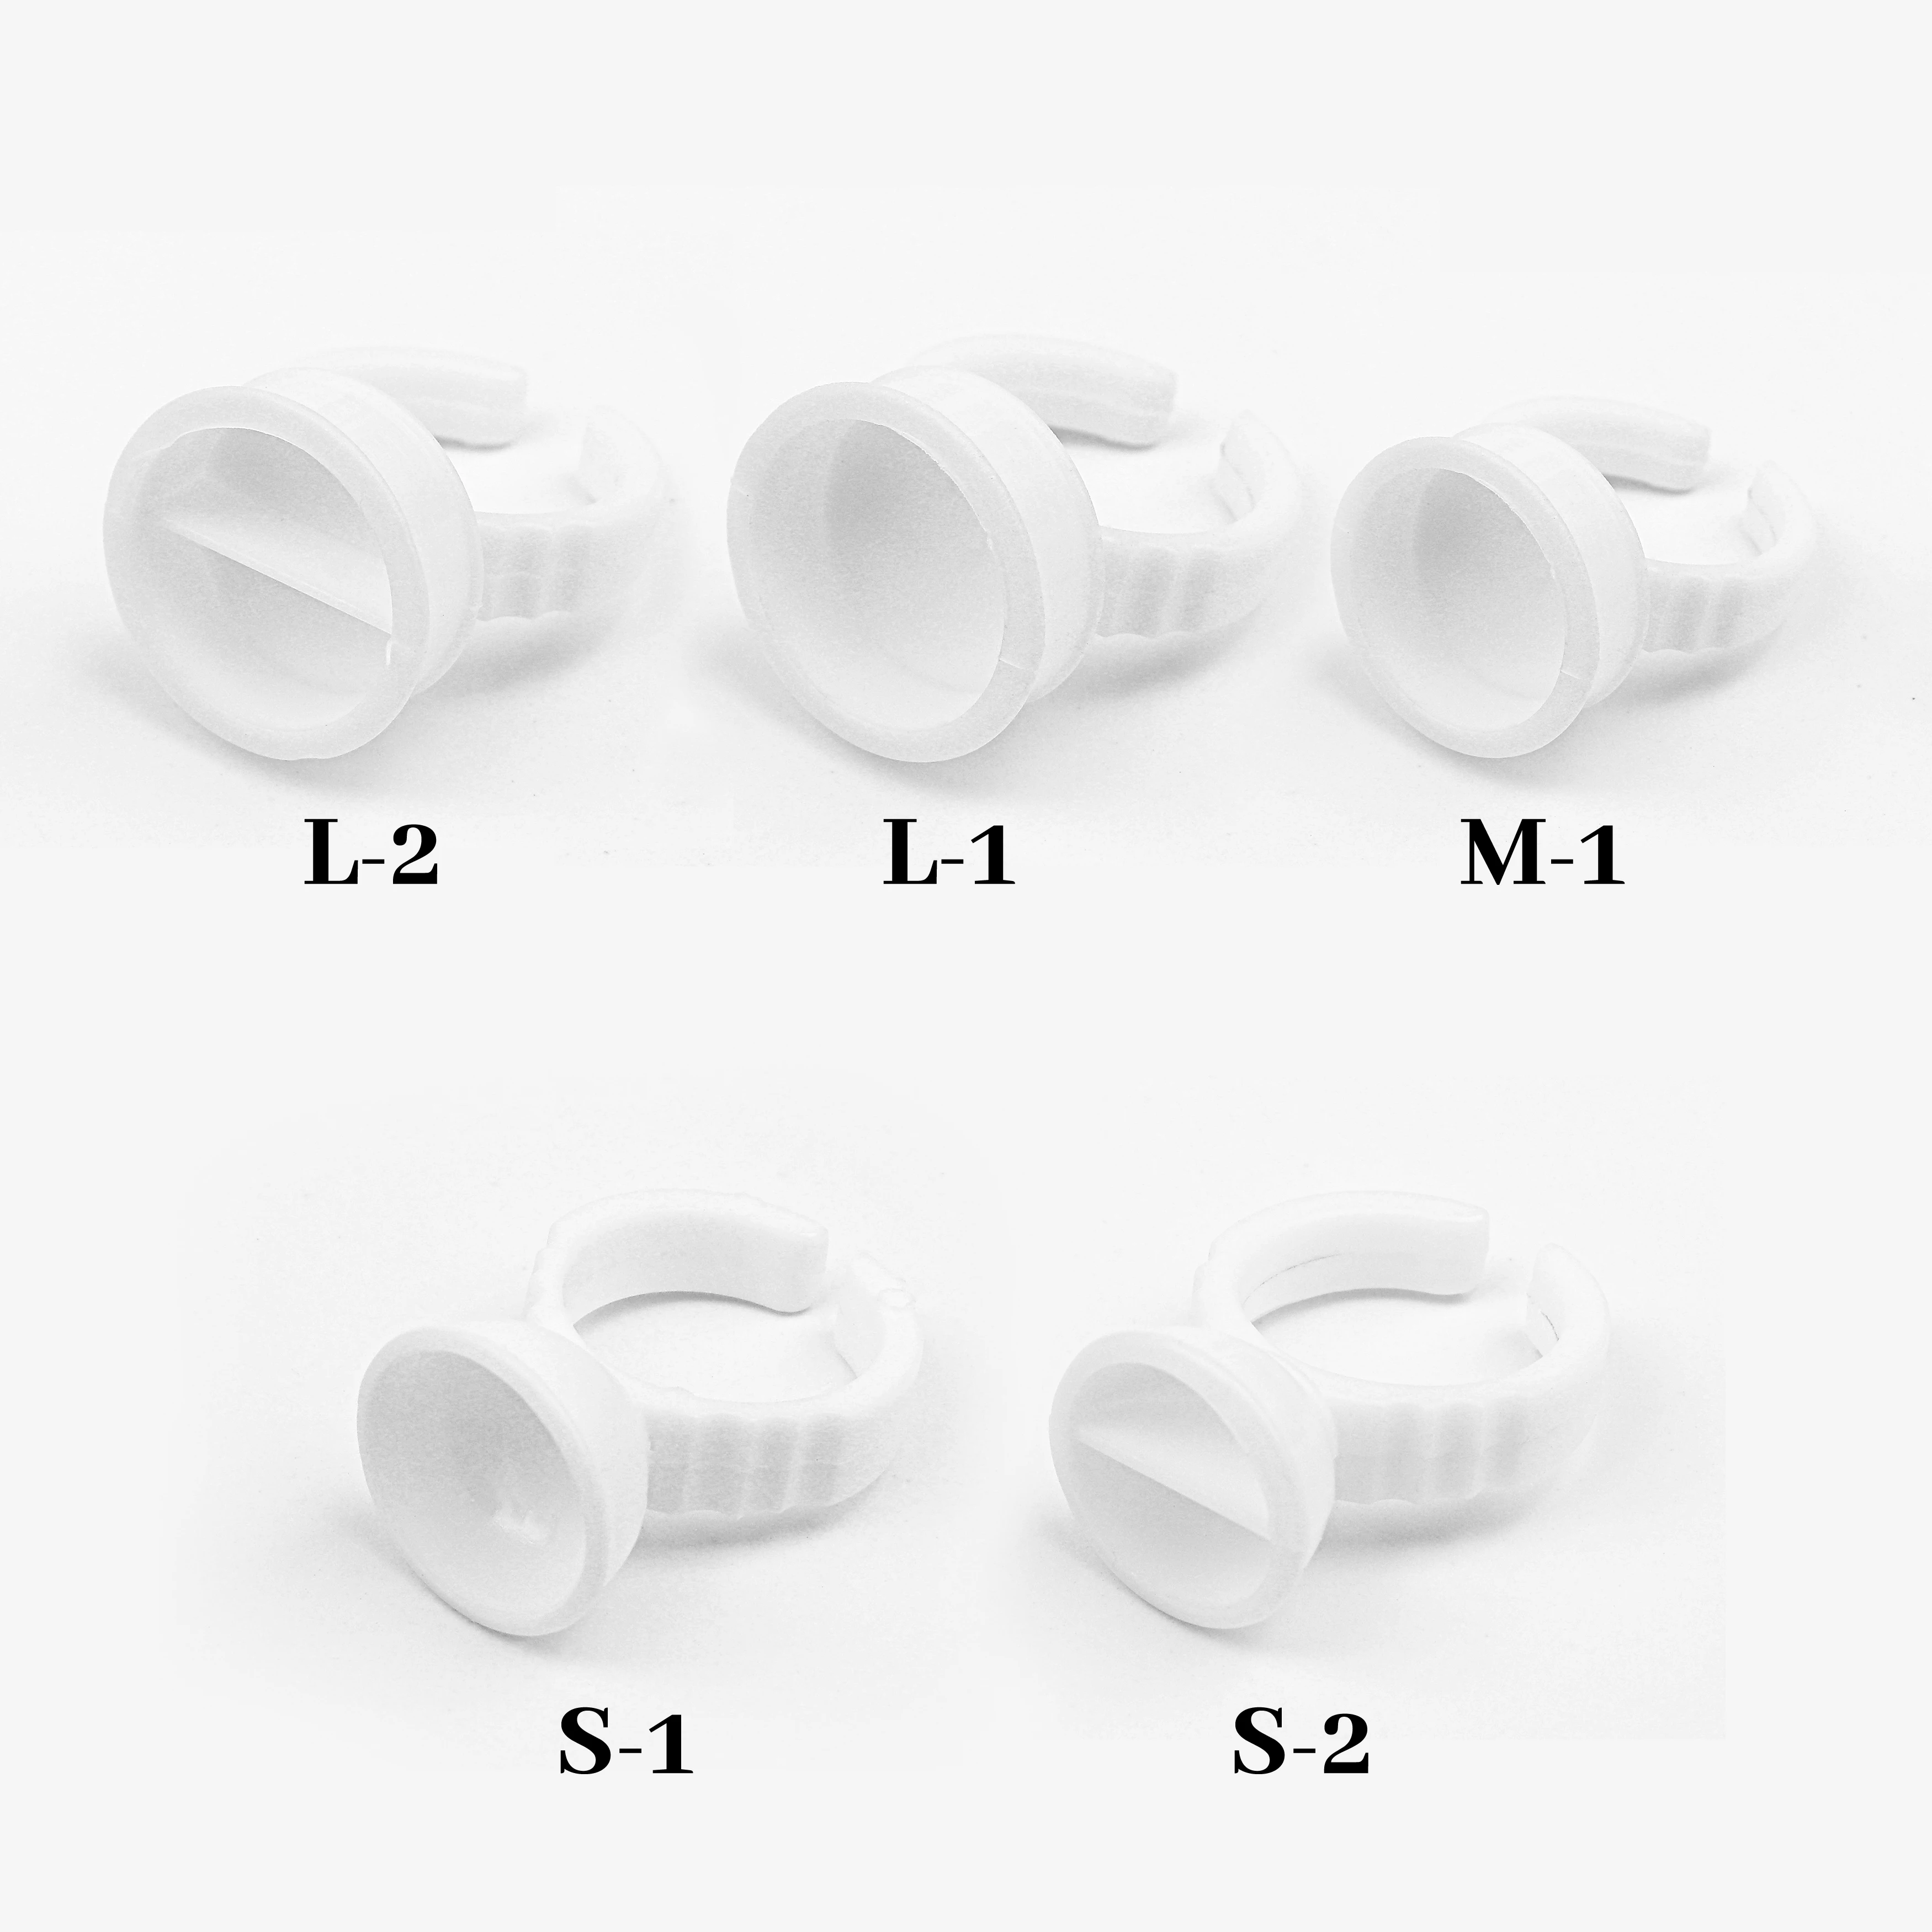 XIUSUZAKI 100 Pcs/Pack Disposable Eyelashes Glue Ring Holder For Eyelash Extension Pallet Eye Lashes Lash Glue Rings Cup Tools